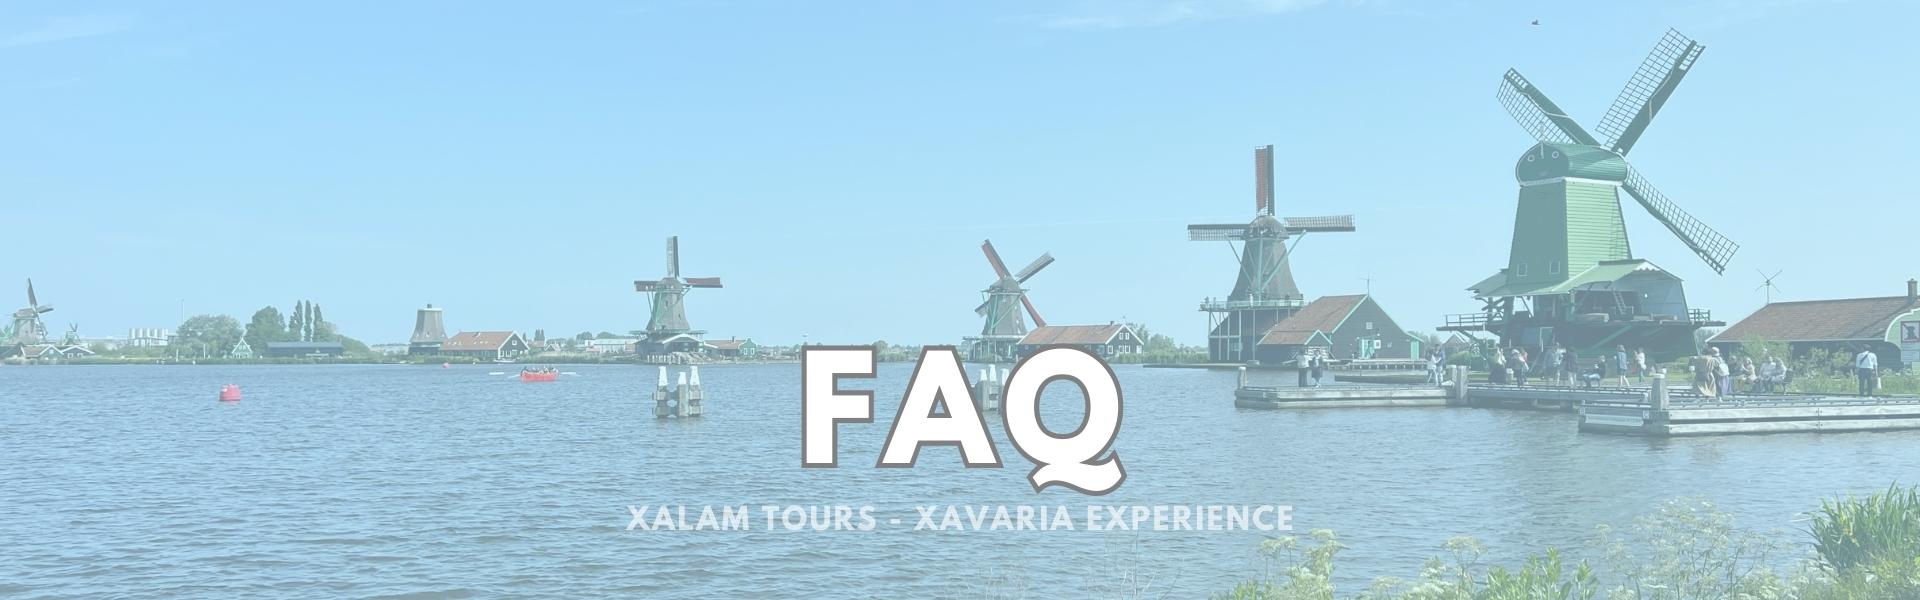 Faq - Holland Experience - Xalam Tours